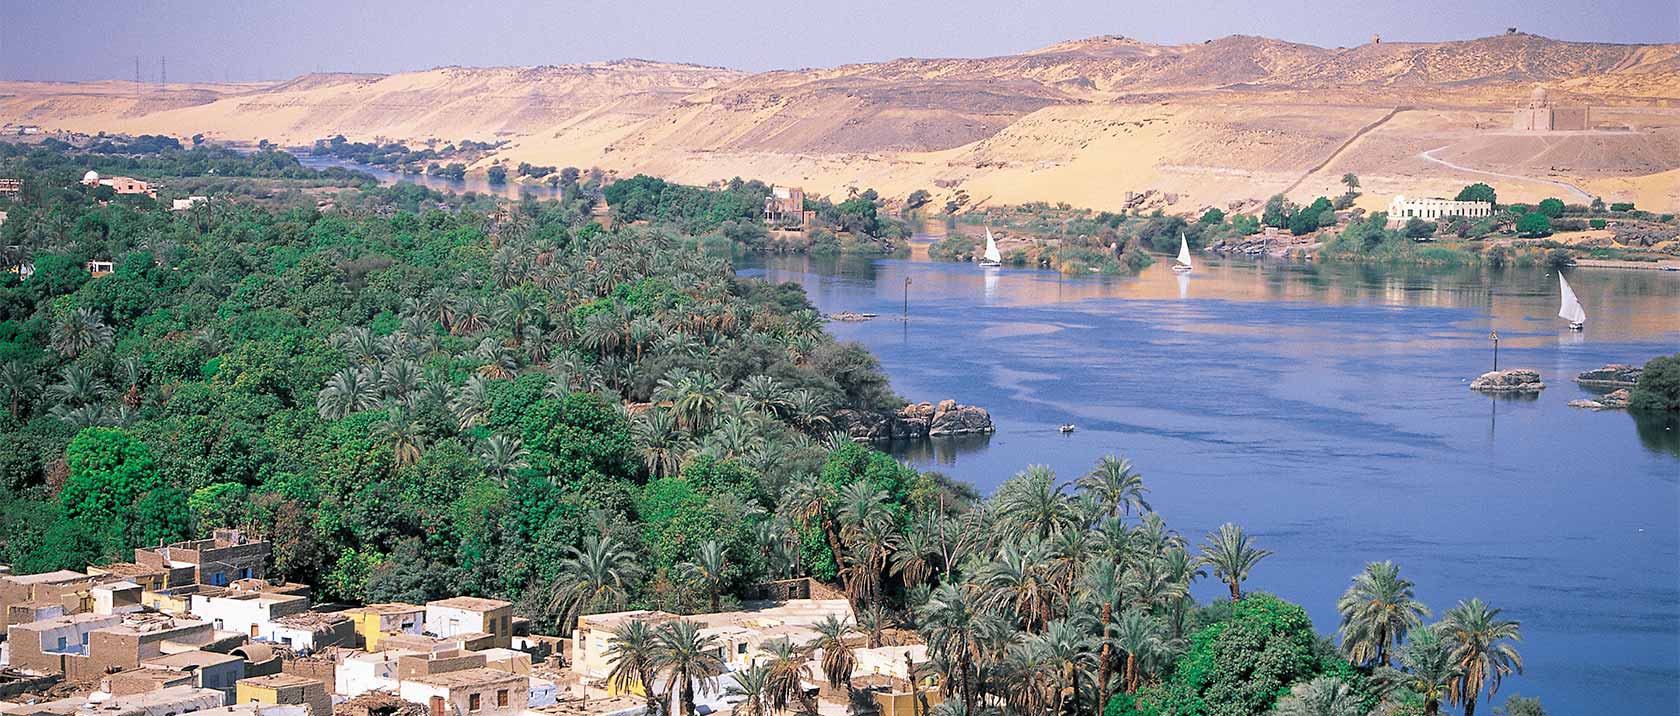 Panorama of the Nile river near Aswan